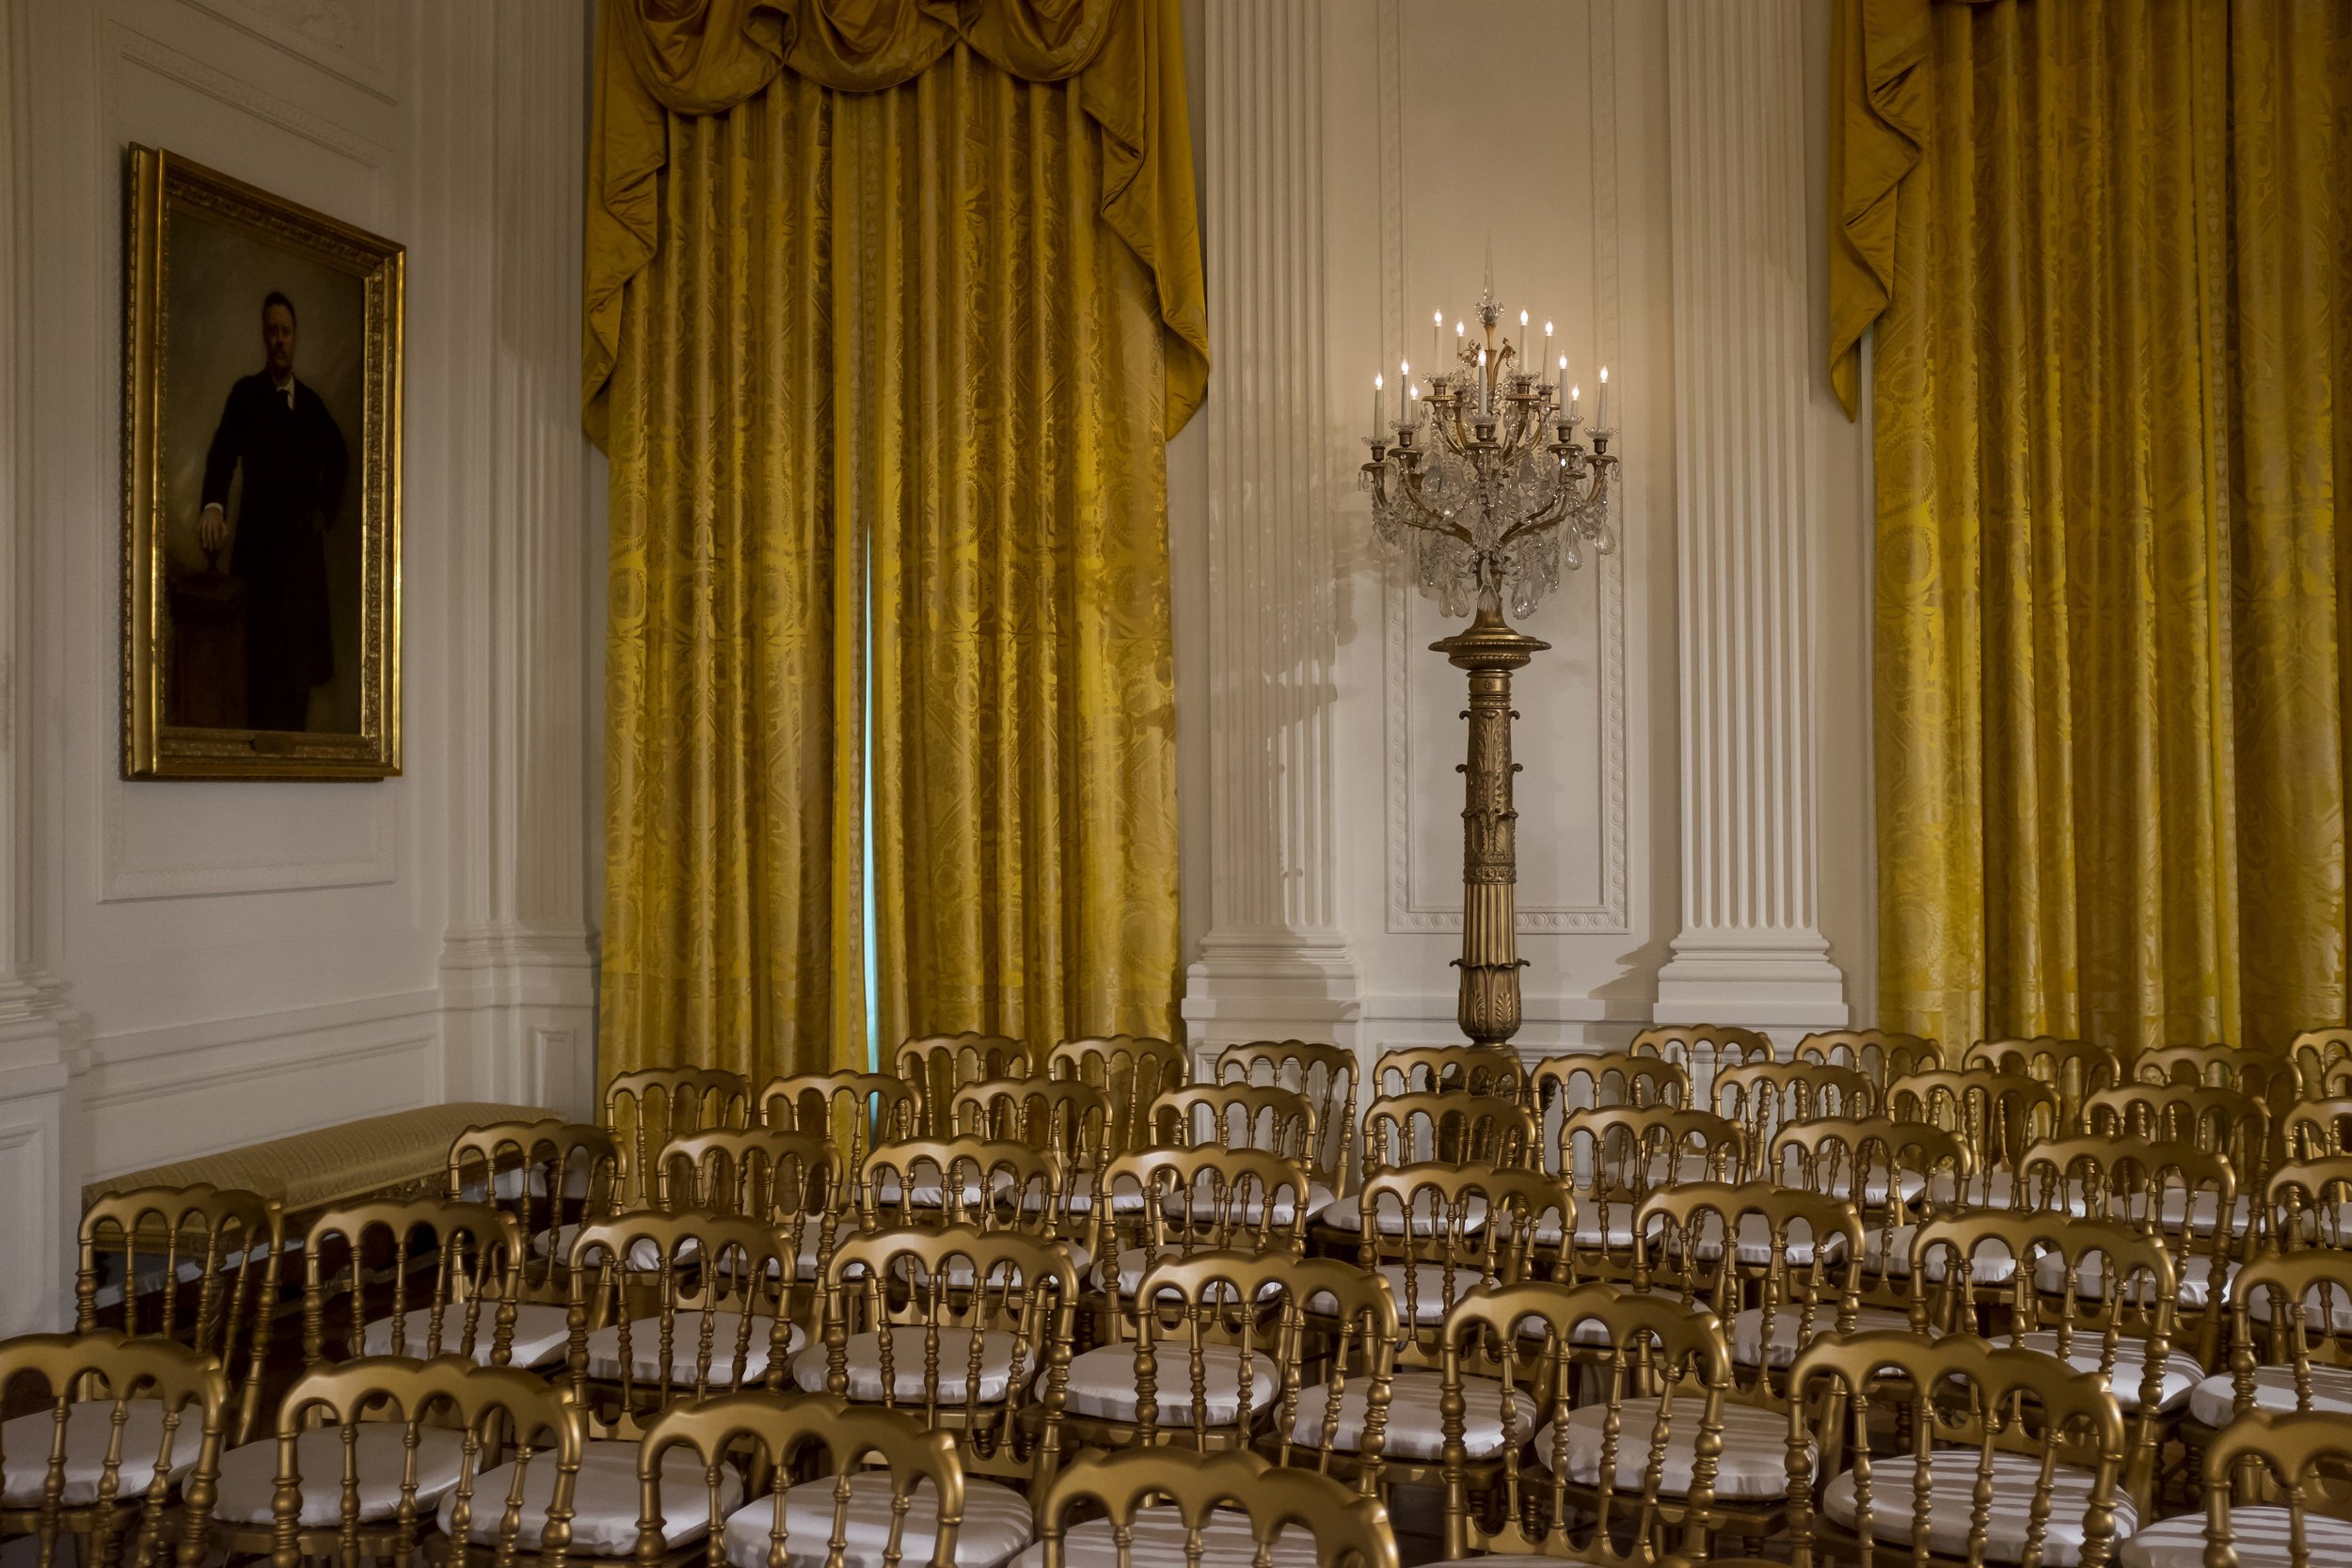   East Room of The White House. Washington DC. 2018  